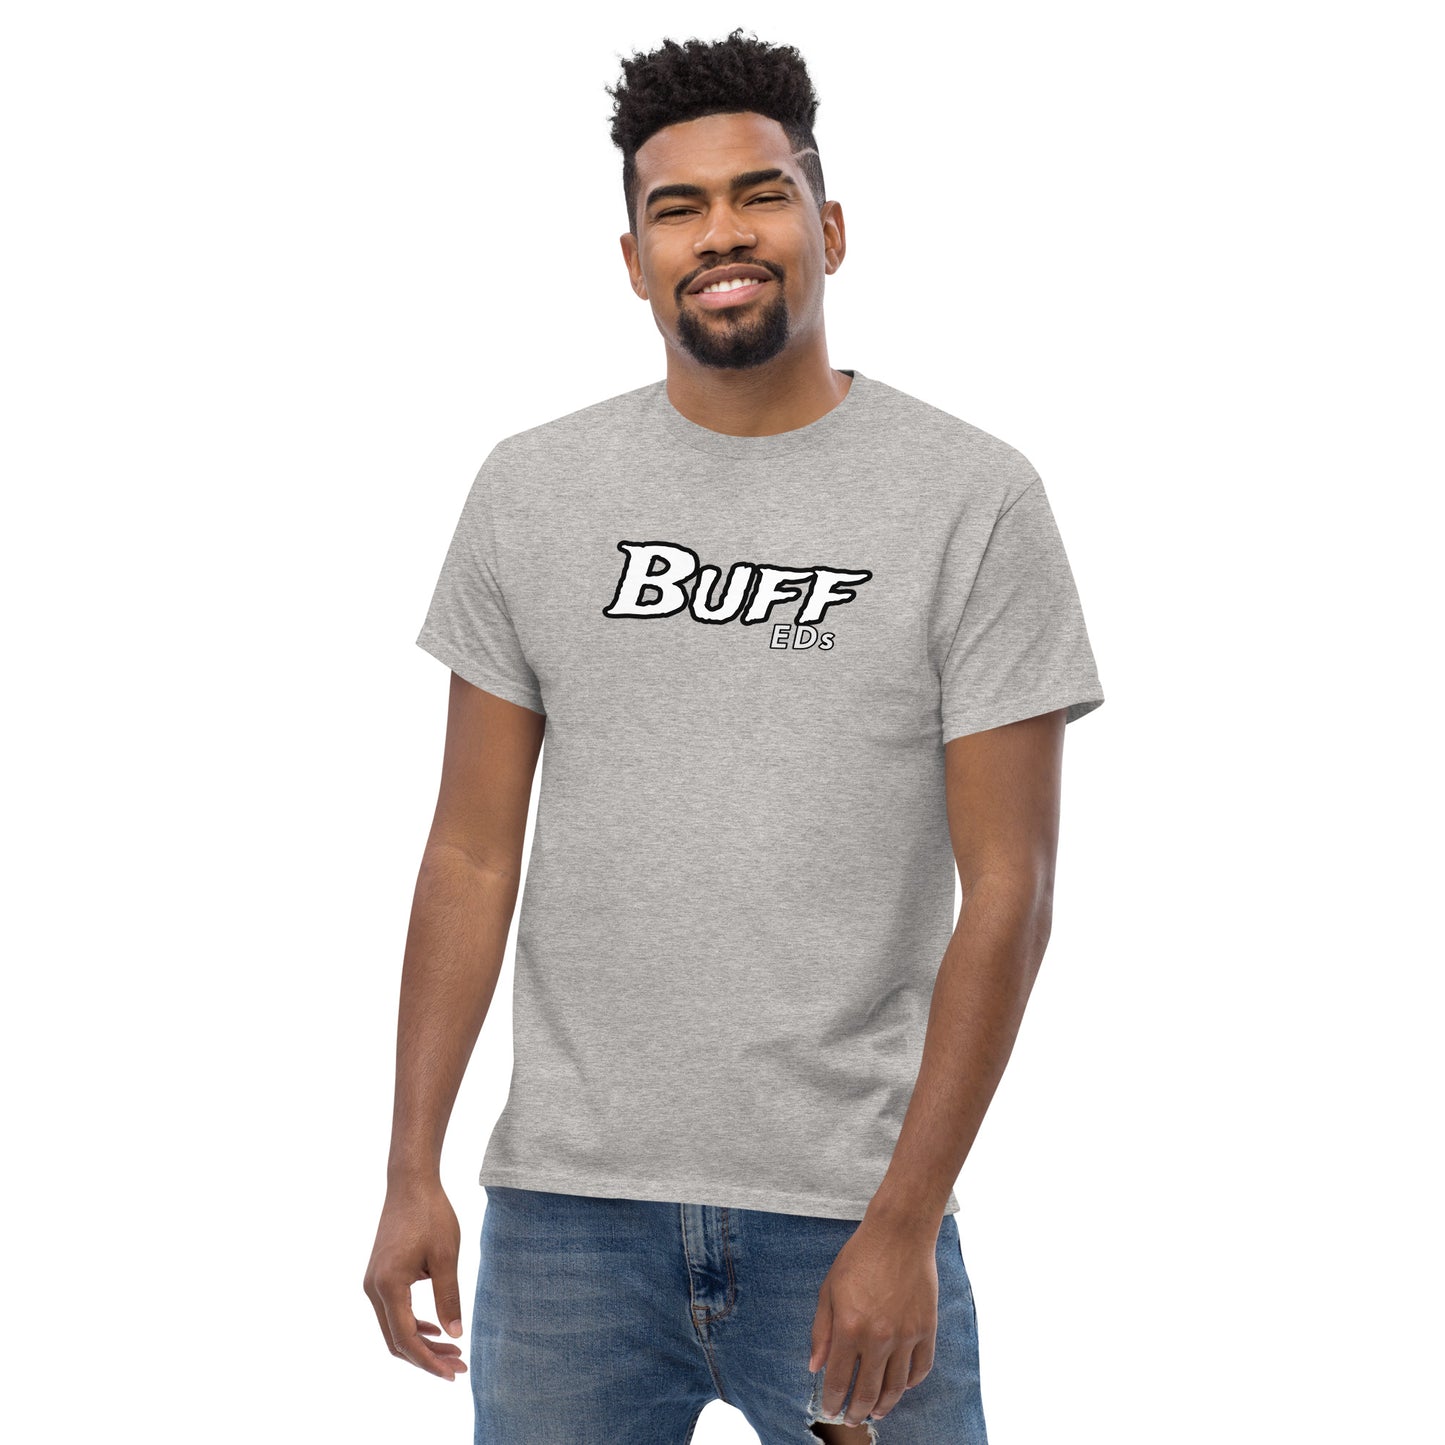 Buff EDs Men's Classic T-Shirt